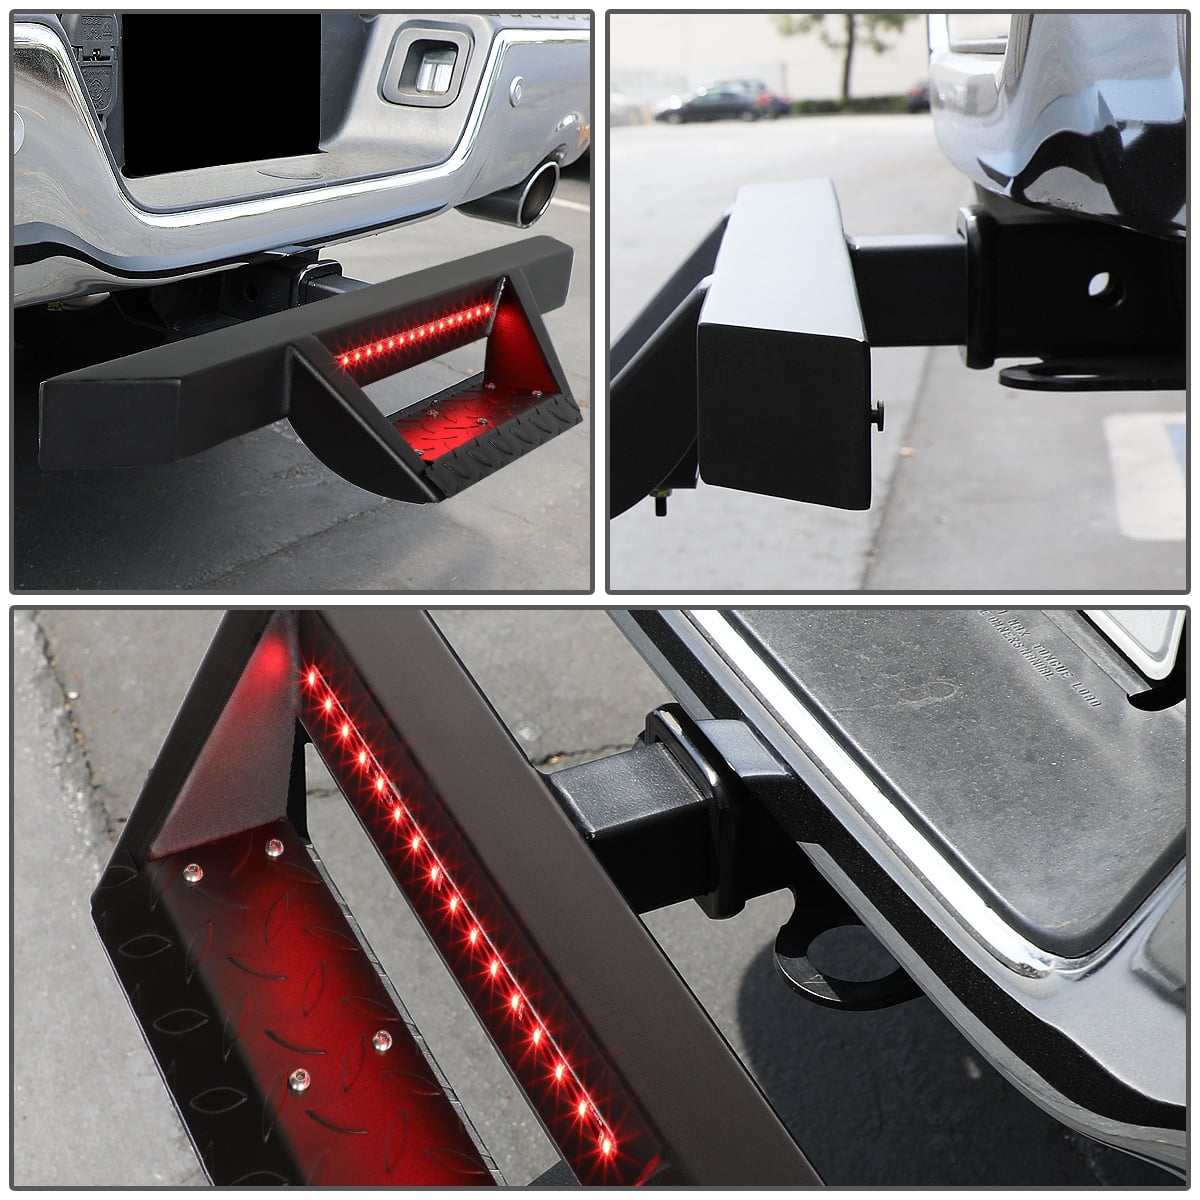 KUAFU 2 inch Receiver Trailer Hitch Step Bar for Truck Pickup W/Led Brake Light & Non-Slip Plate Fits Most Cars SUV Trucks Pickups 